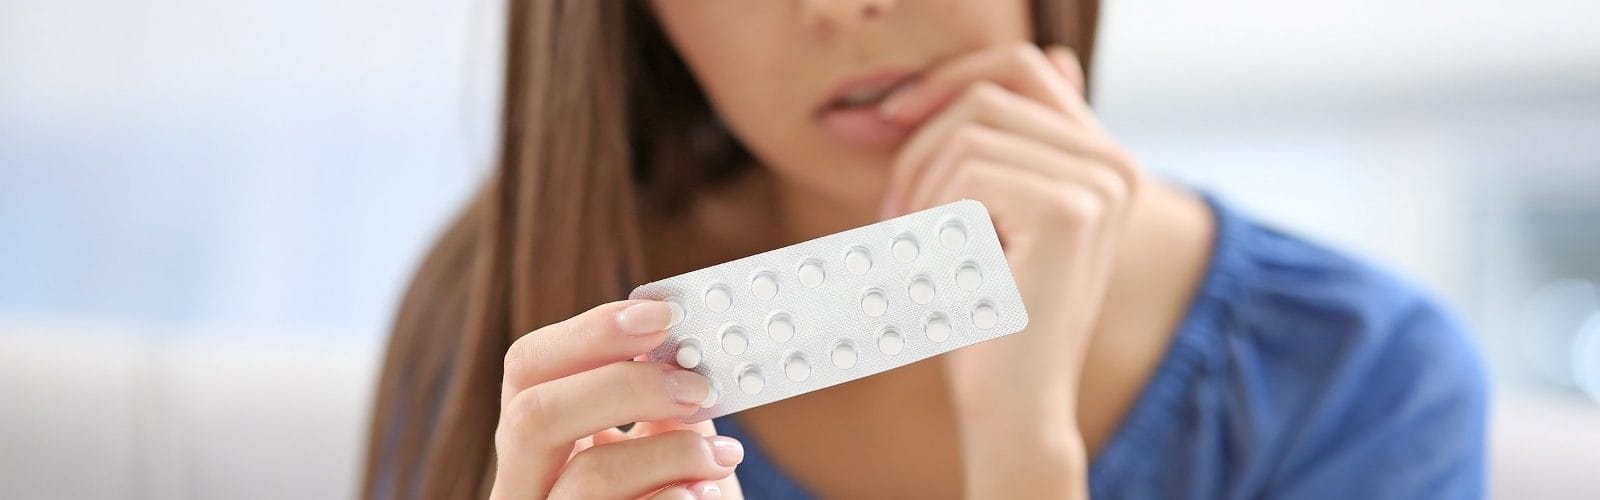 Can Birth Control Cause Fertility Problems?